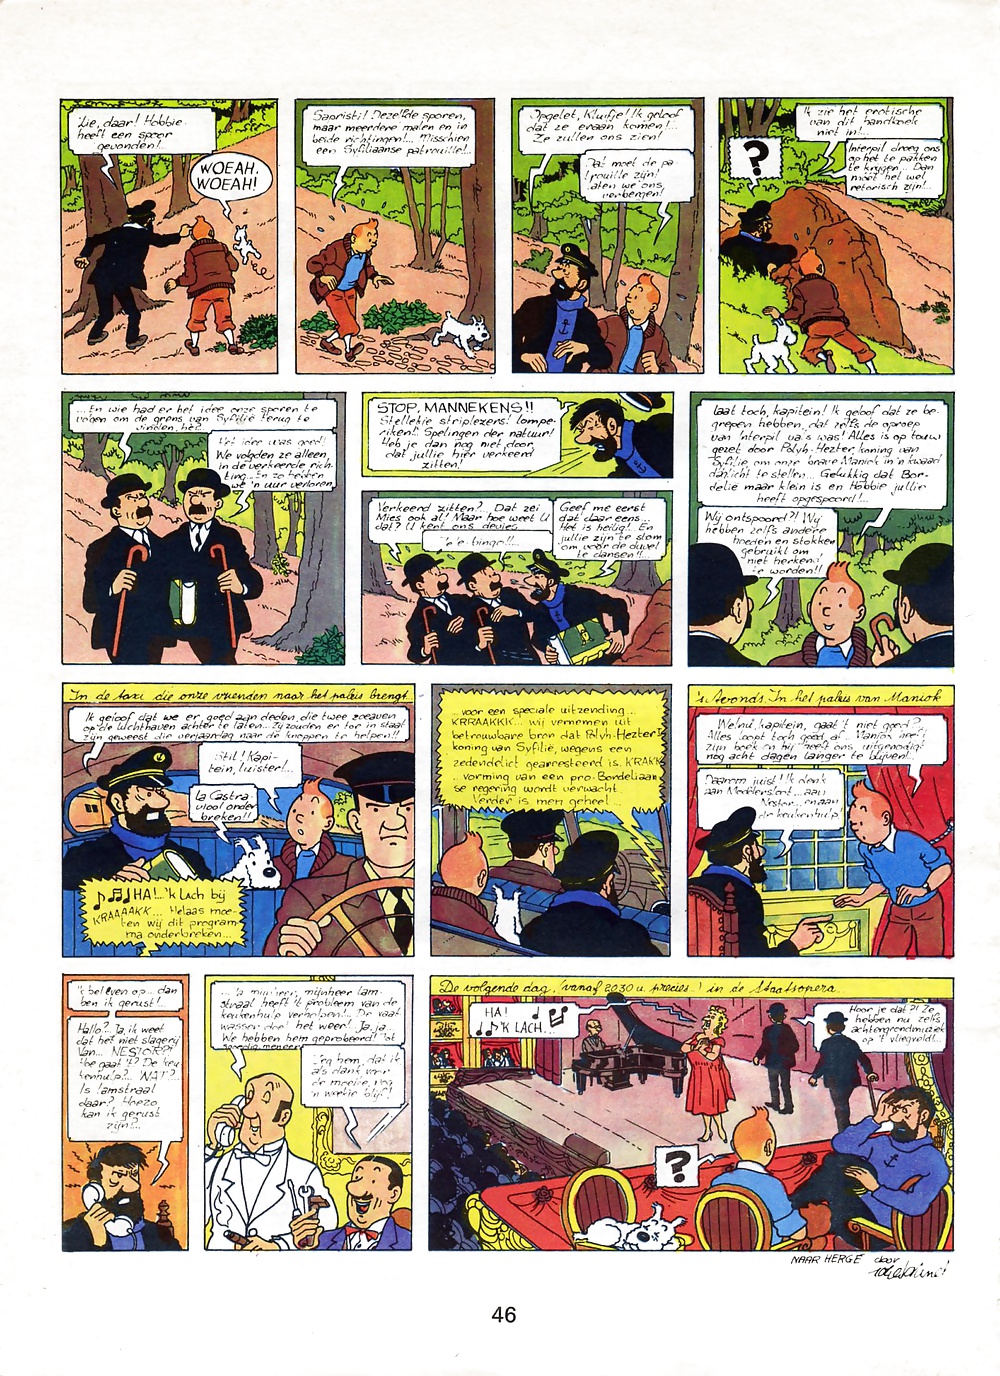 Weinlese-Comic - Strip-tease #41123199